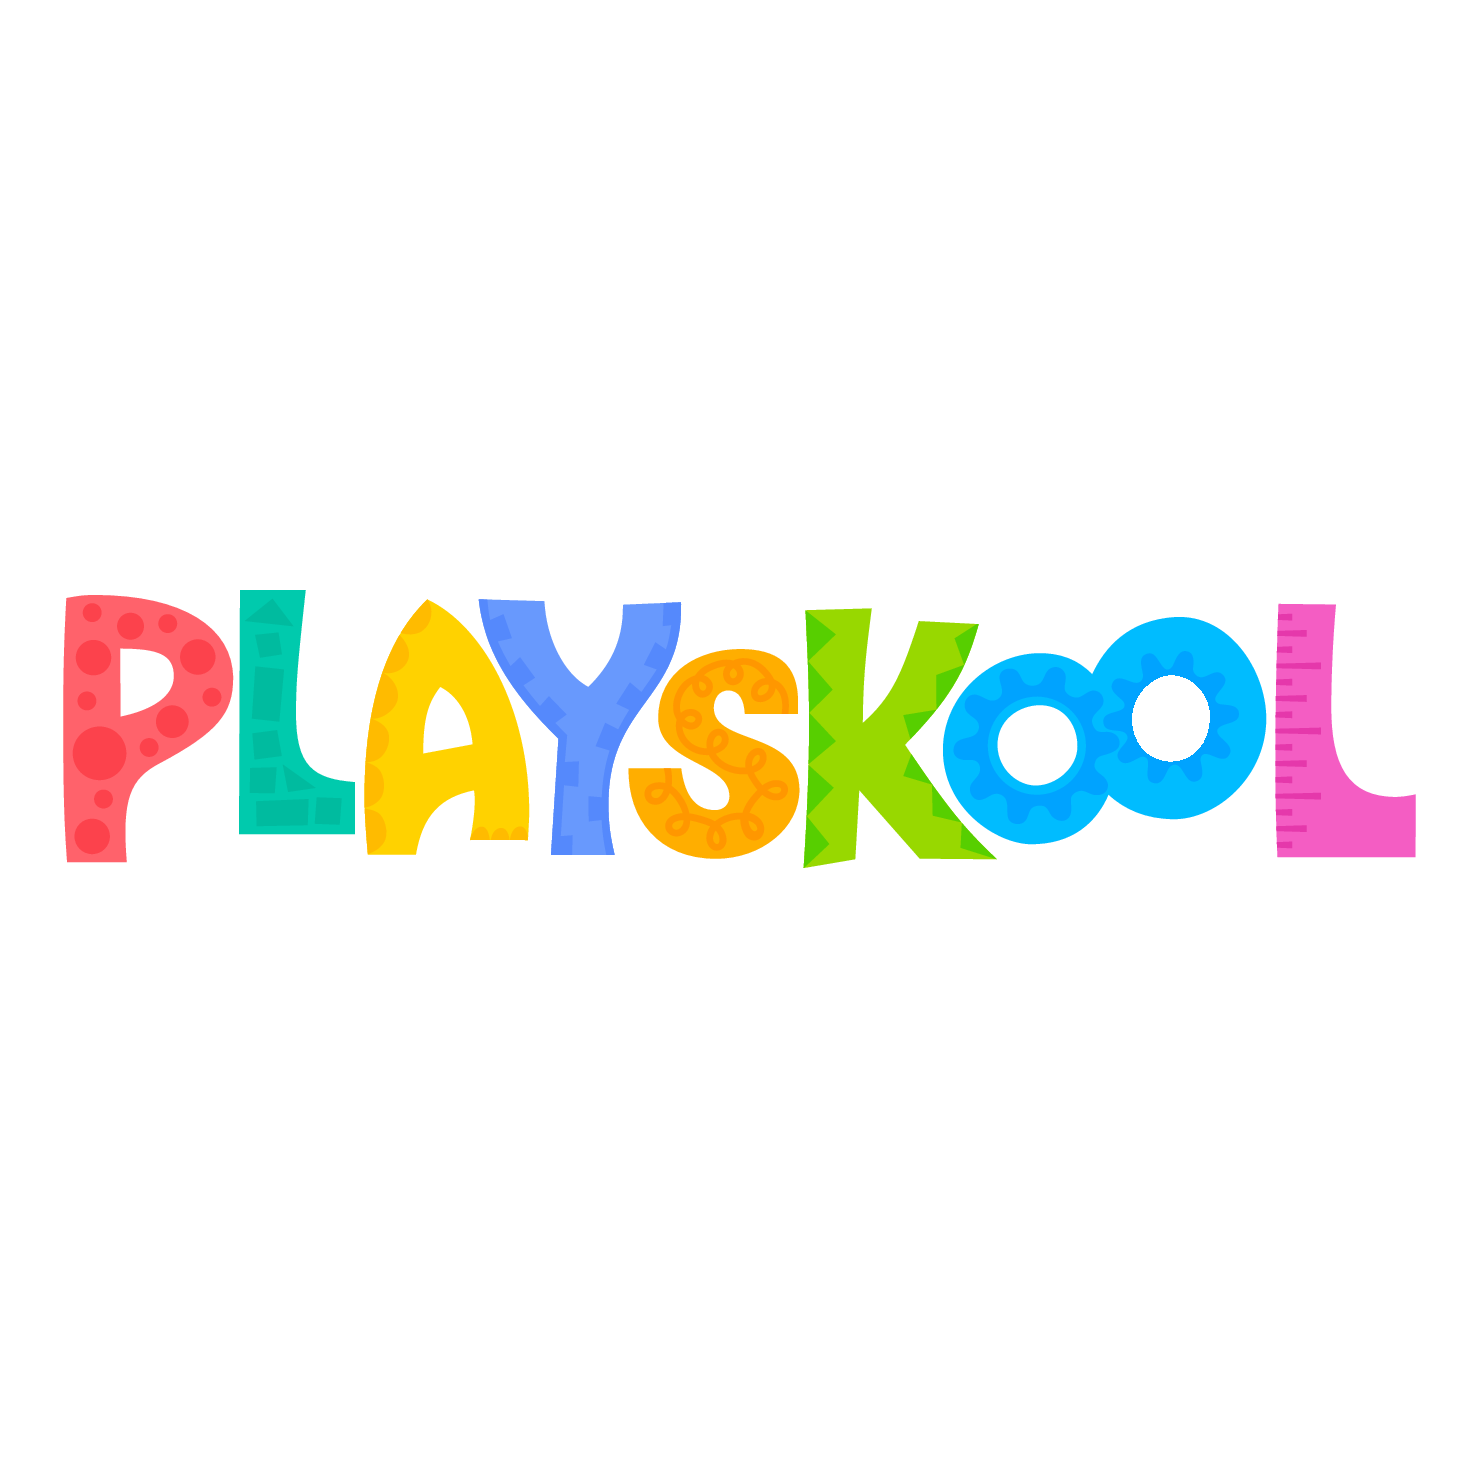 PLAYSKOOL logo